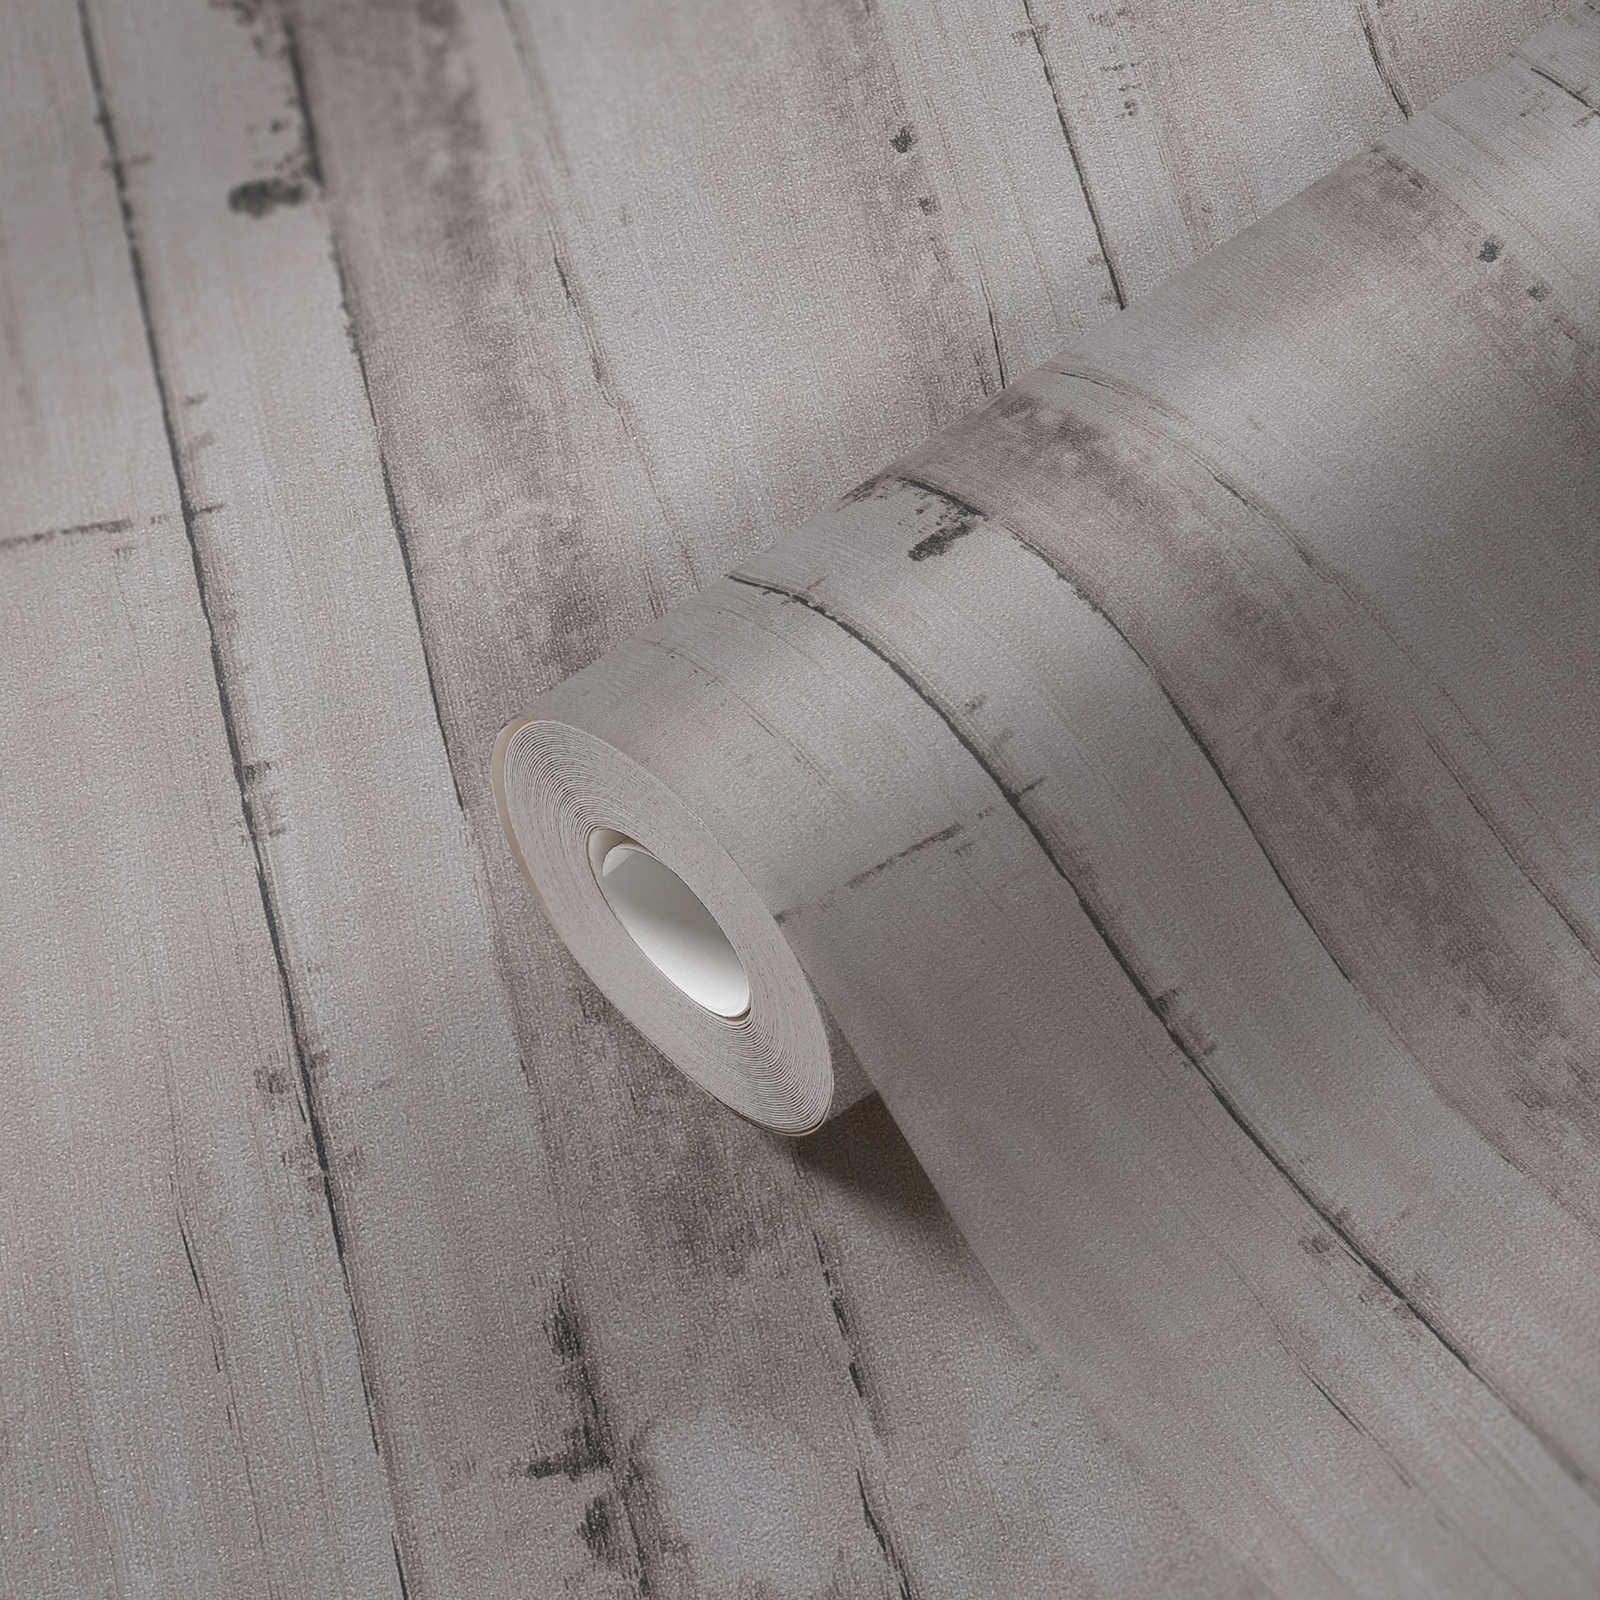             Vliestapete mit Holzoptik PVC-frei – Grau
        